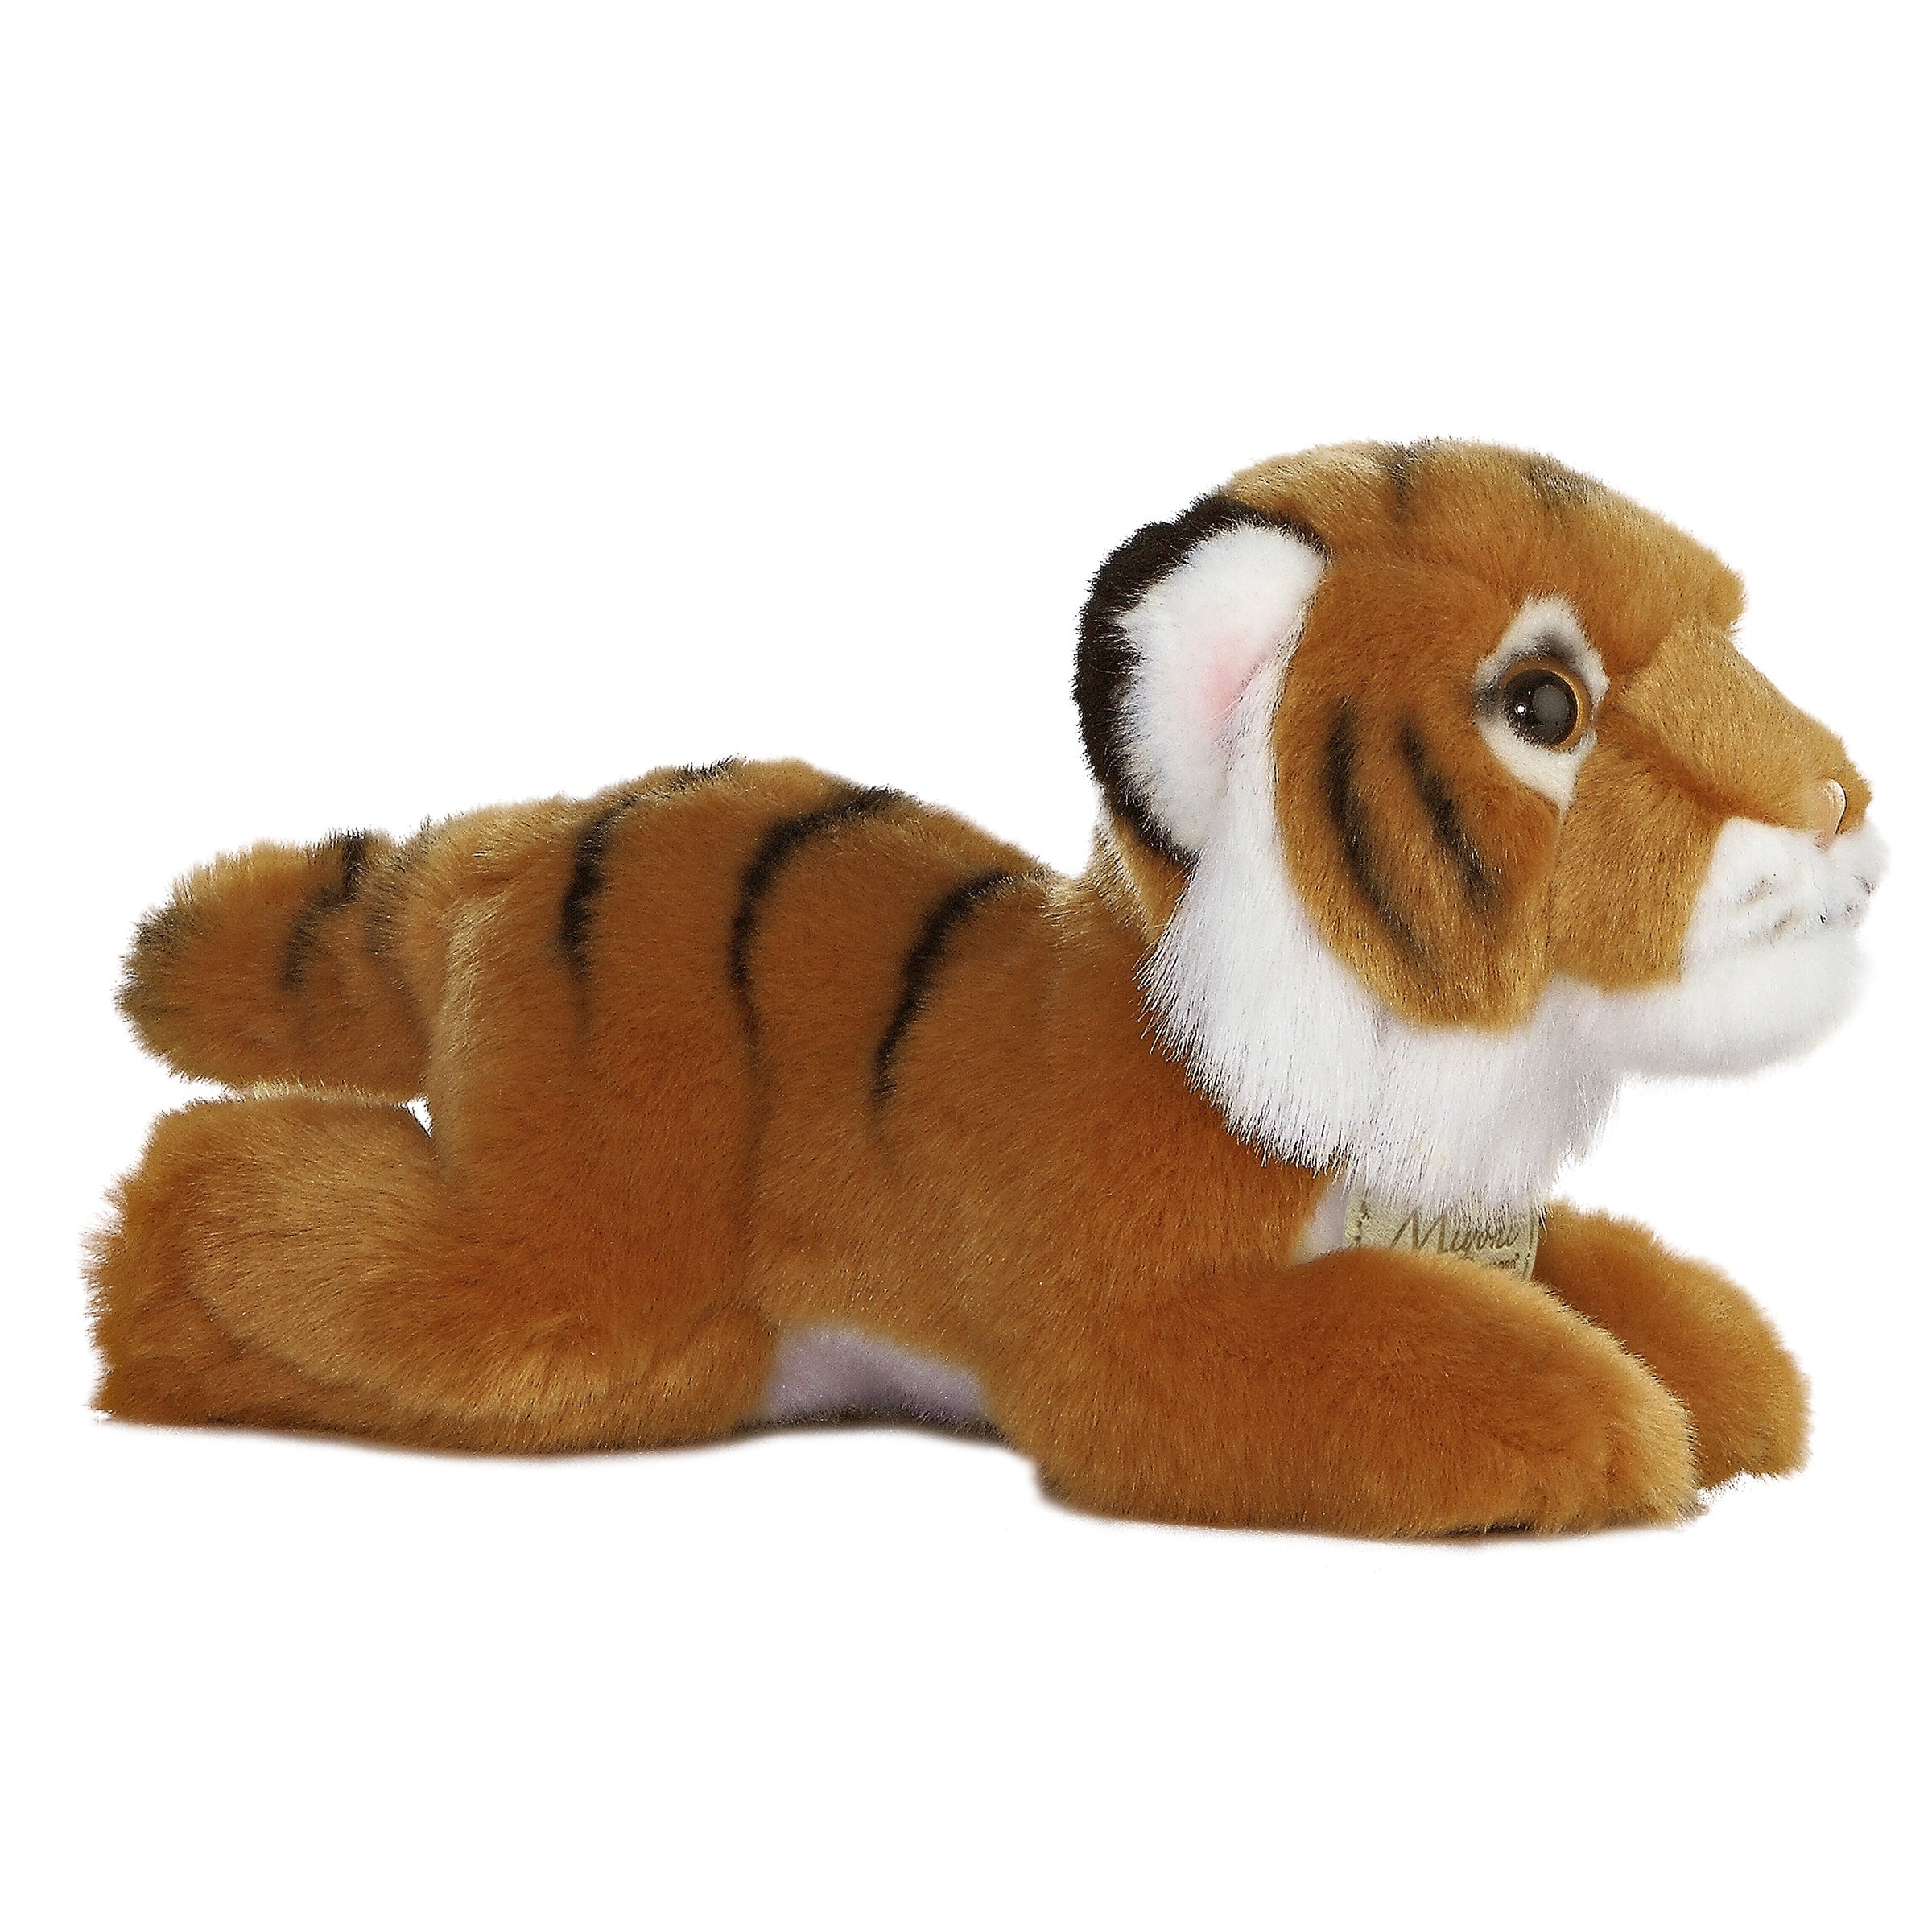 Plush toy of a floppy tiger